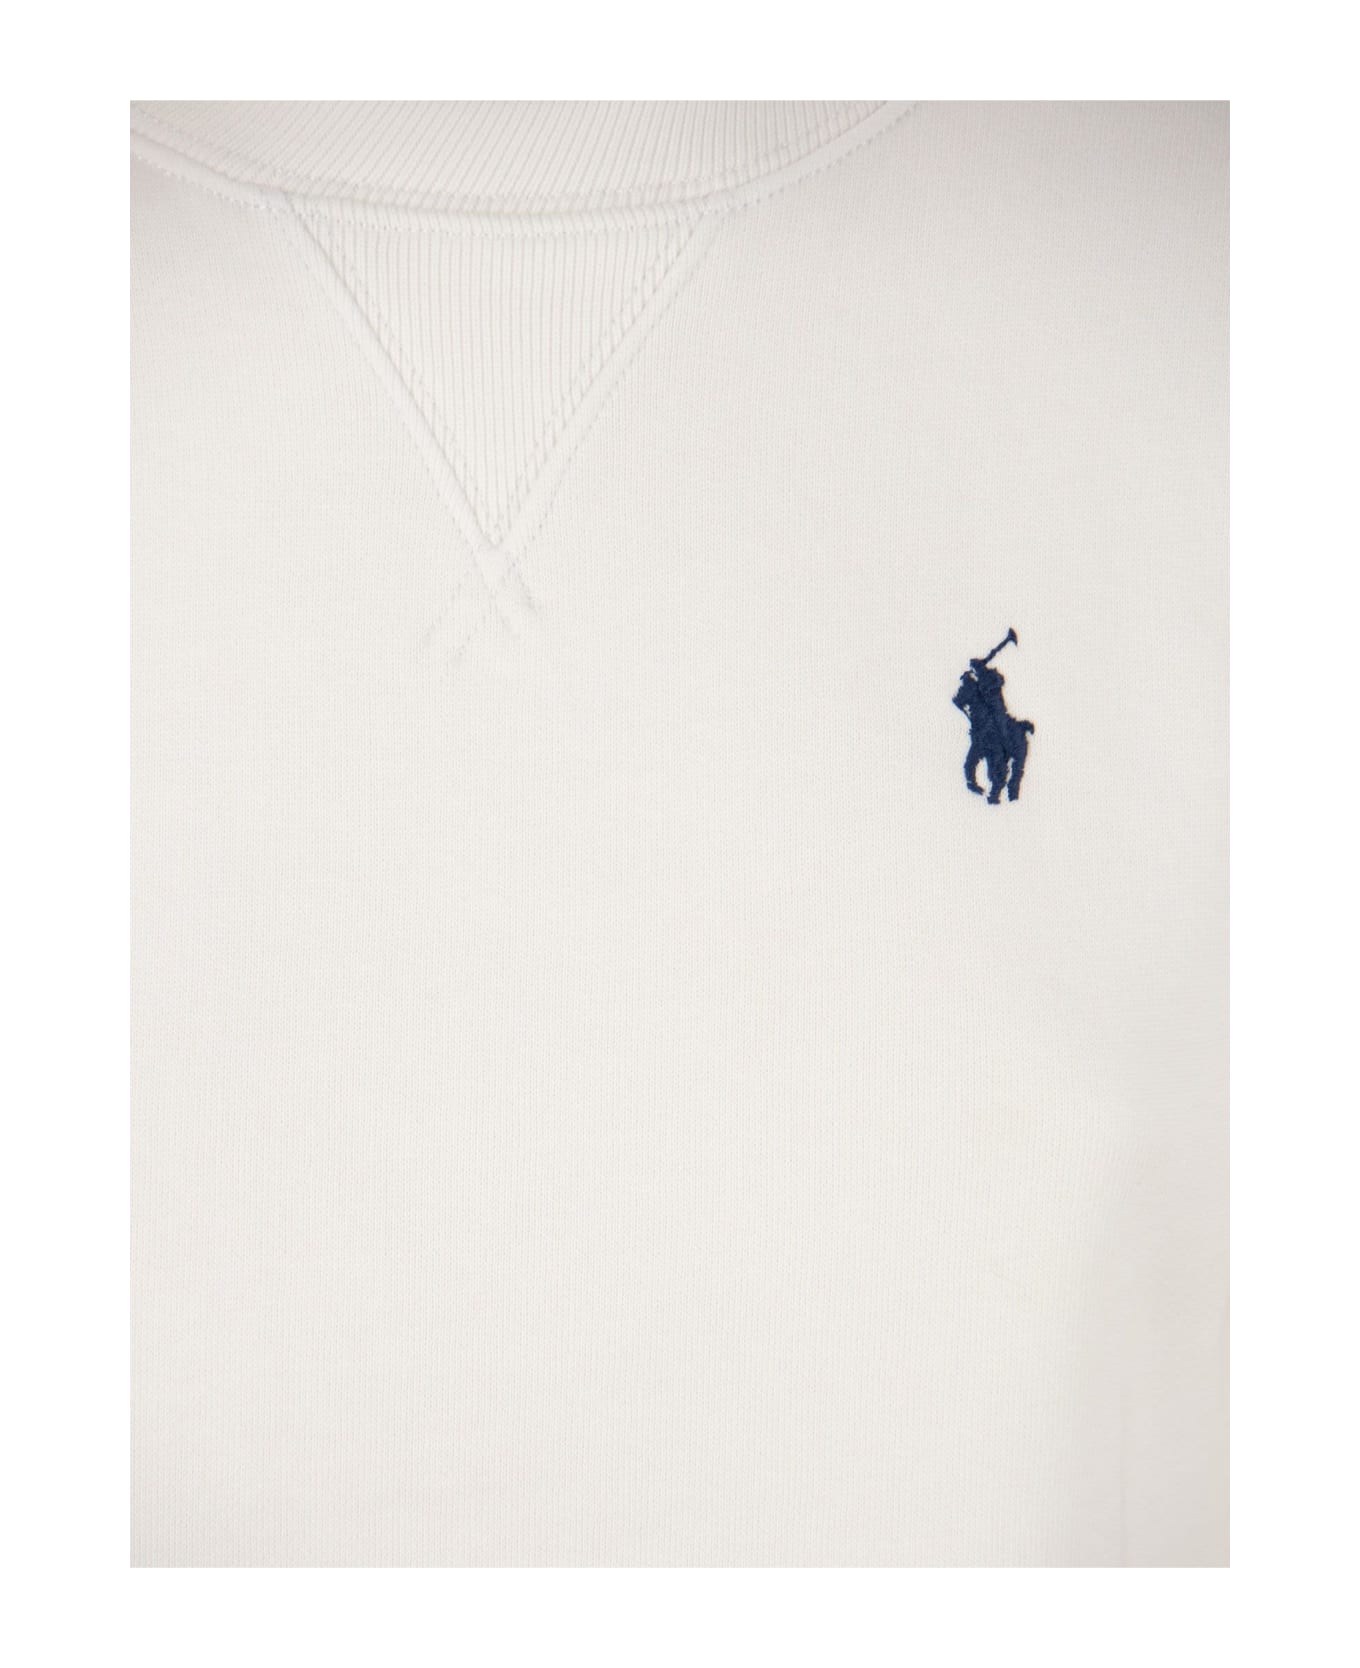 Ralph Lauren Sweatshirt - White